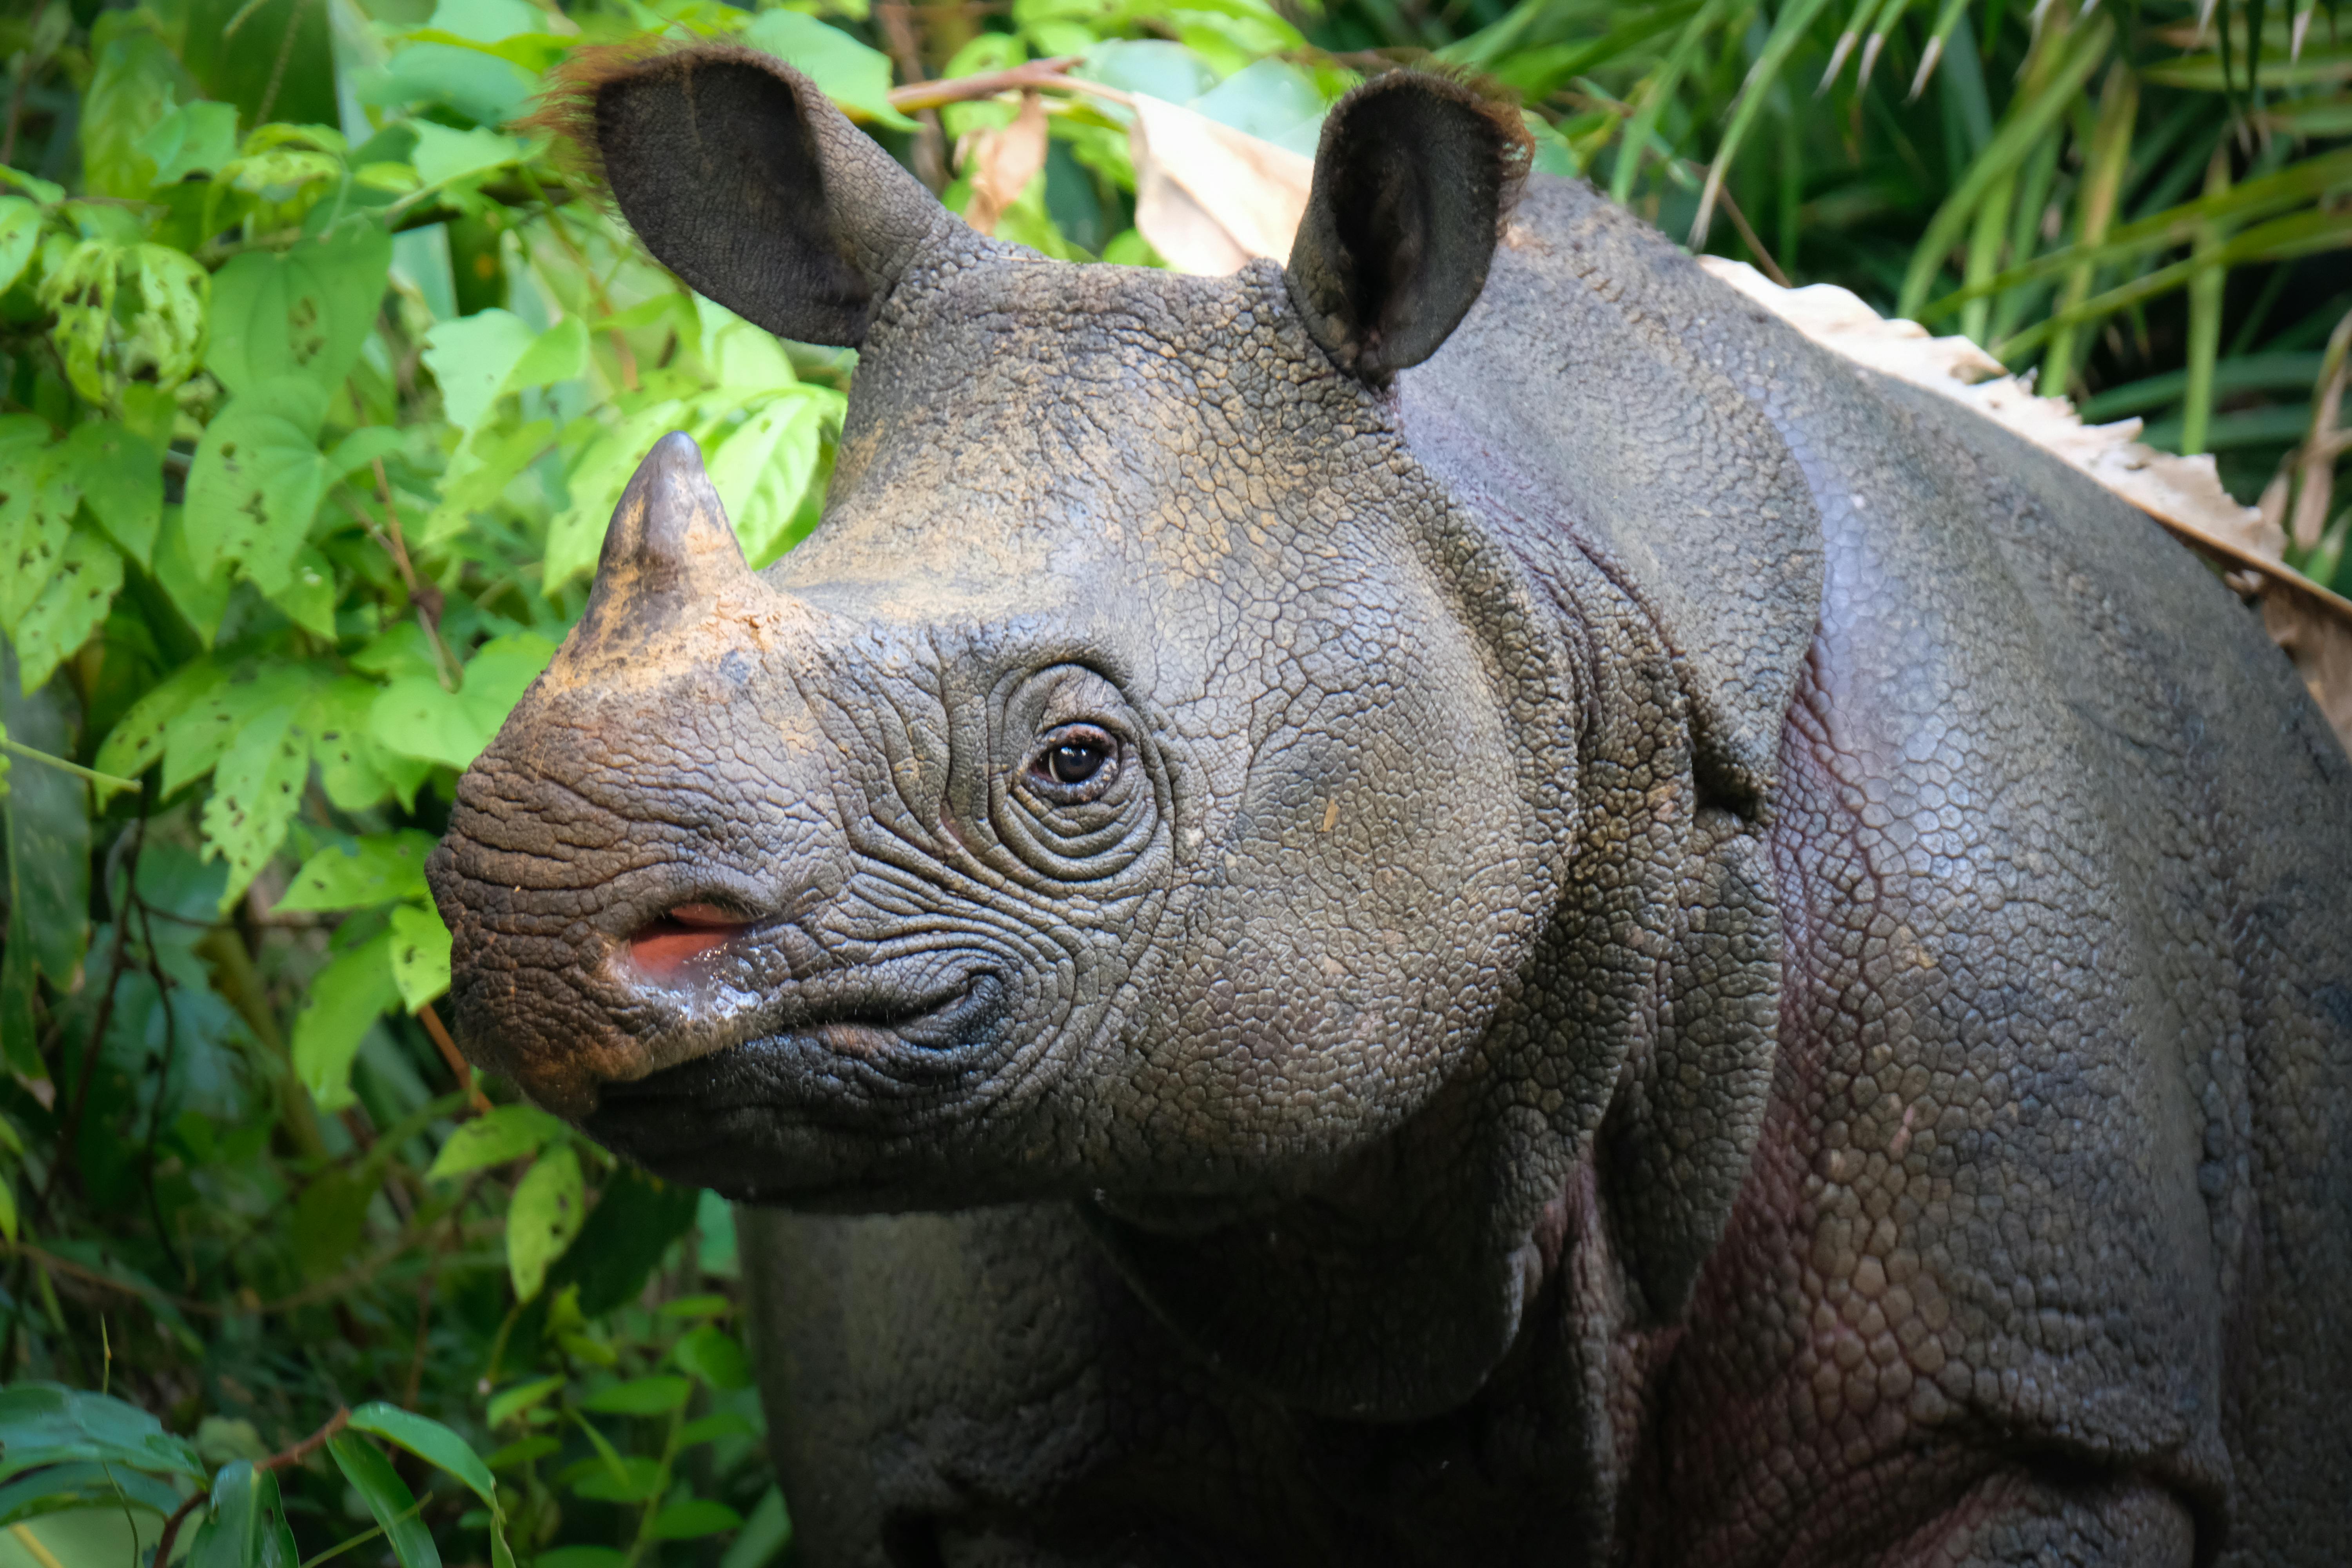 Javan Rhino Population Continues to Slowly Grow